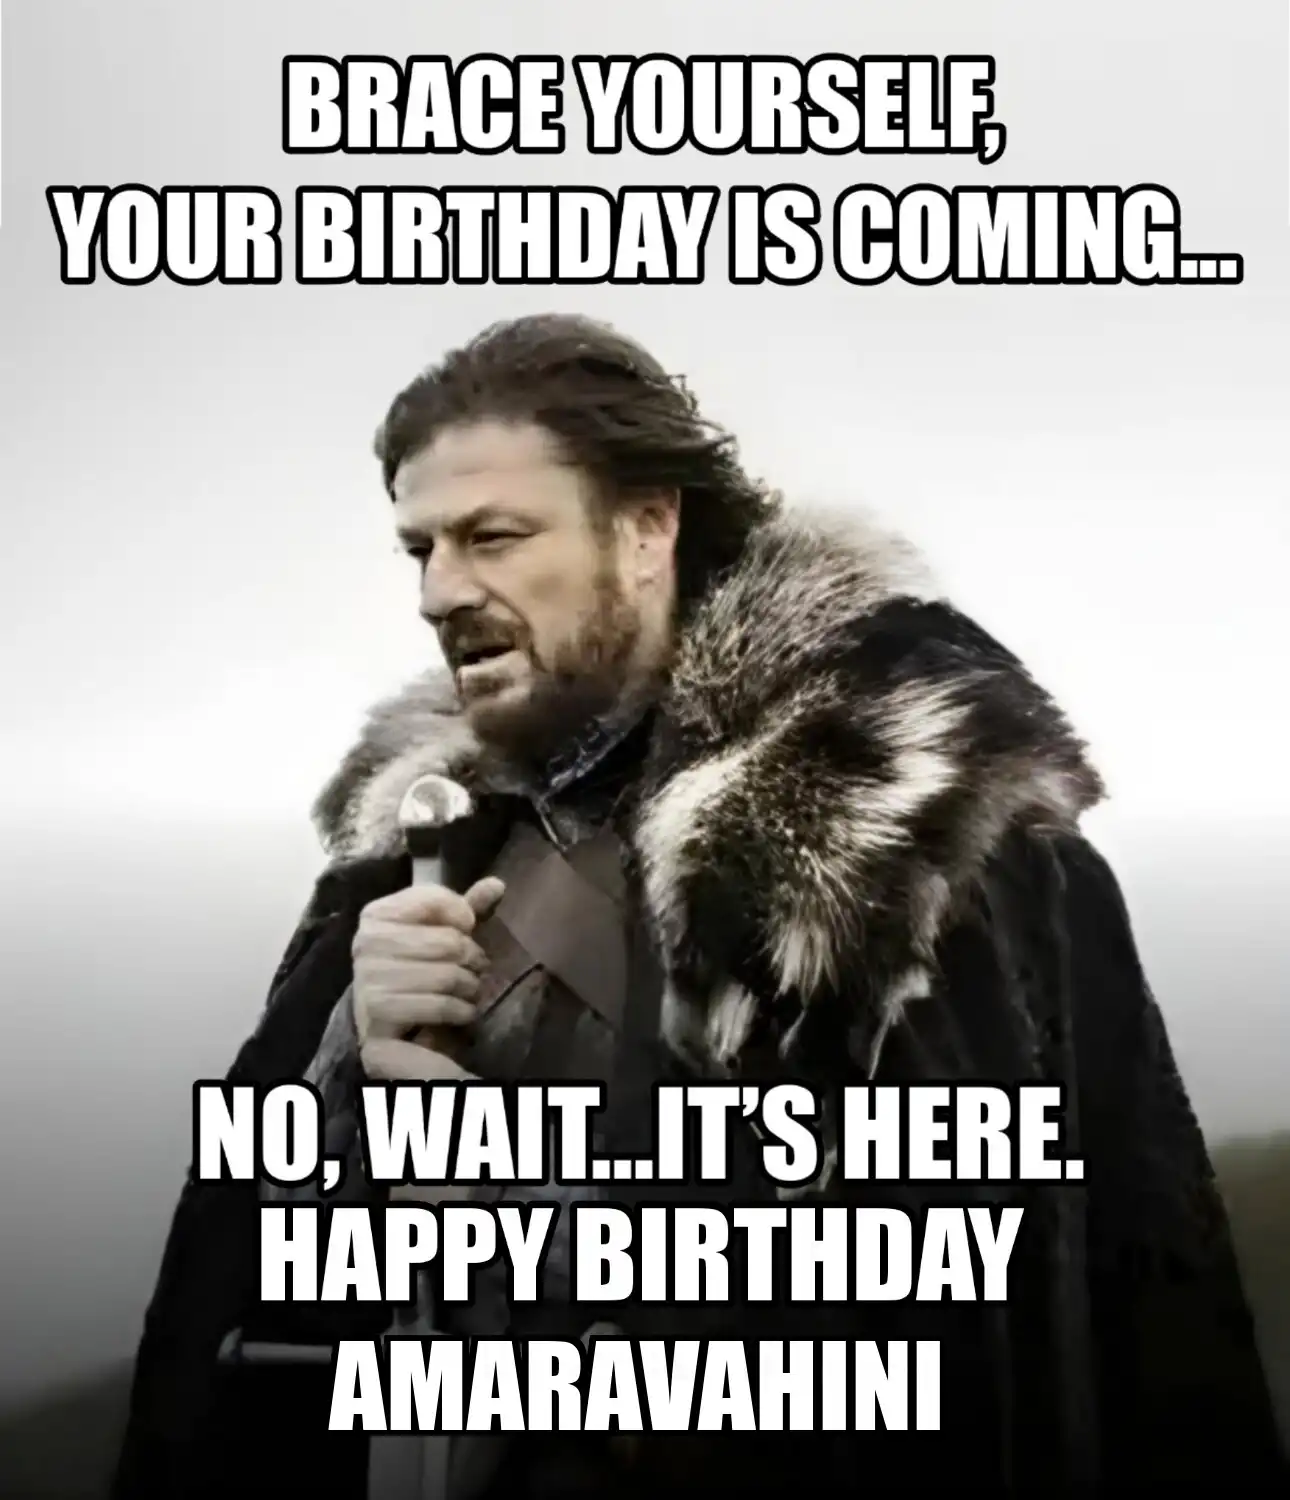 Happy Birthday Amaravahini Brace Yourself Your Birthday Is Coming Meme